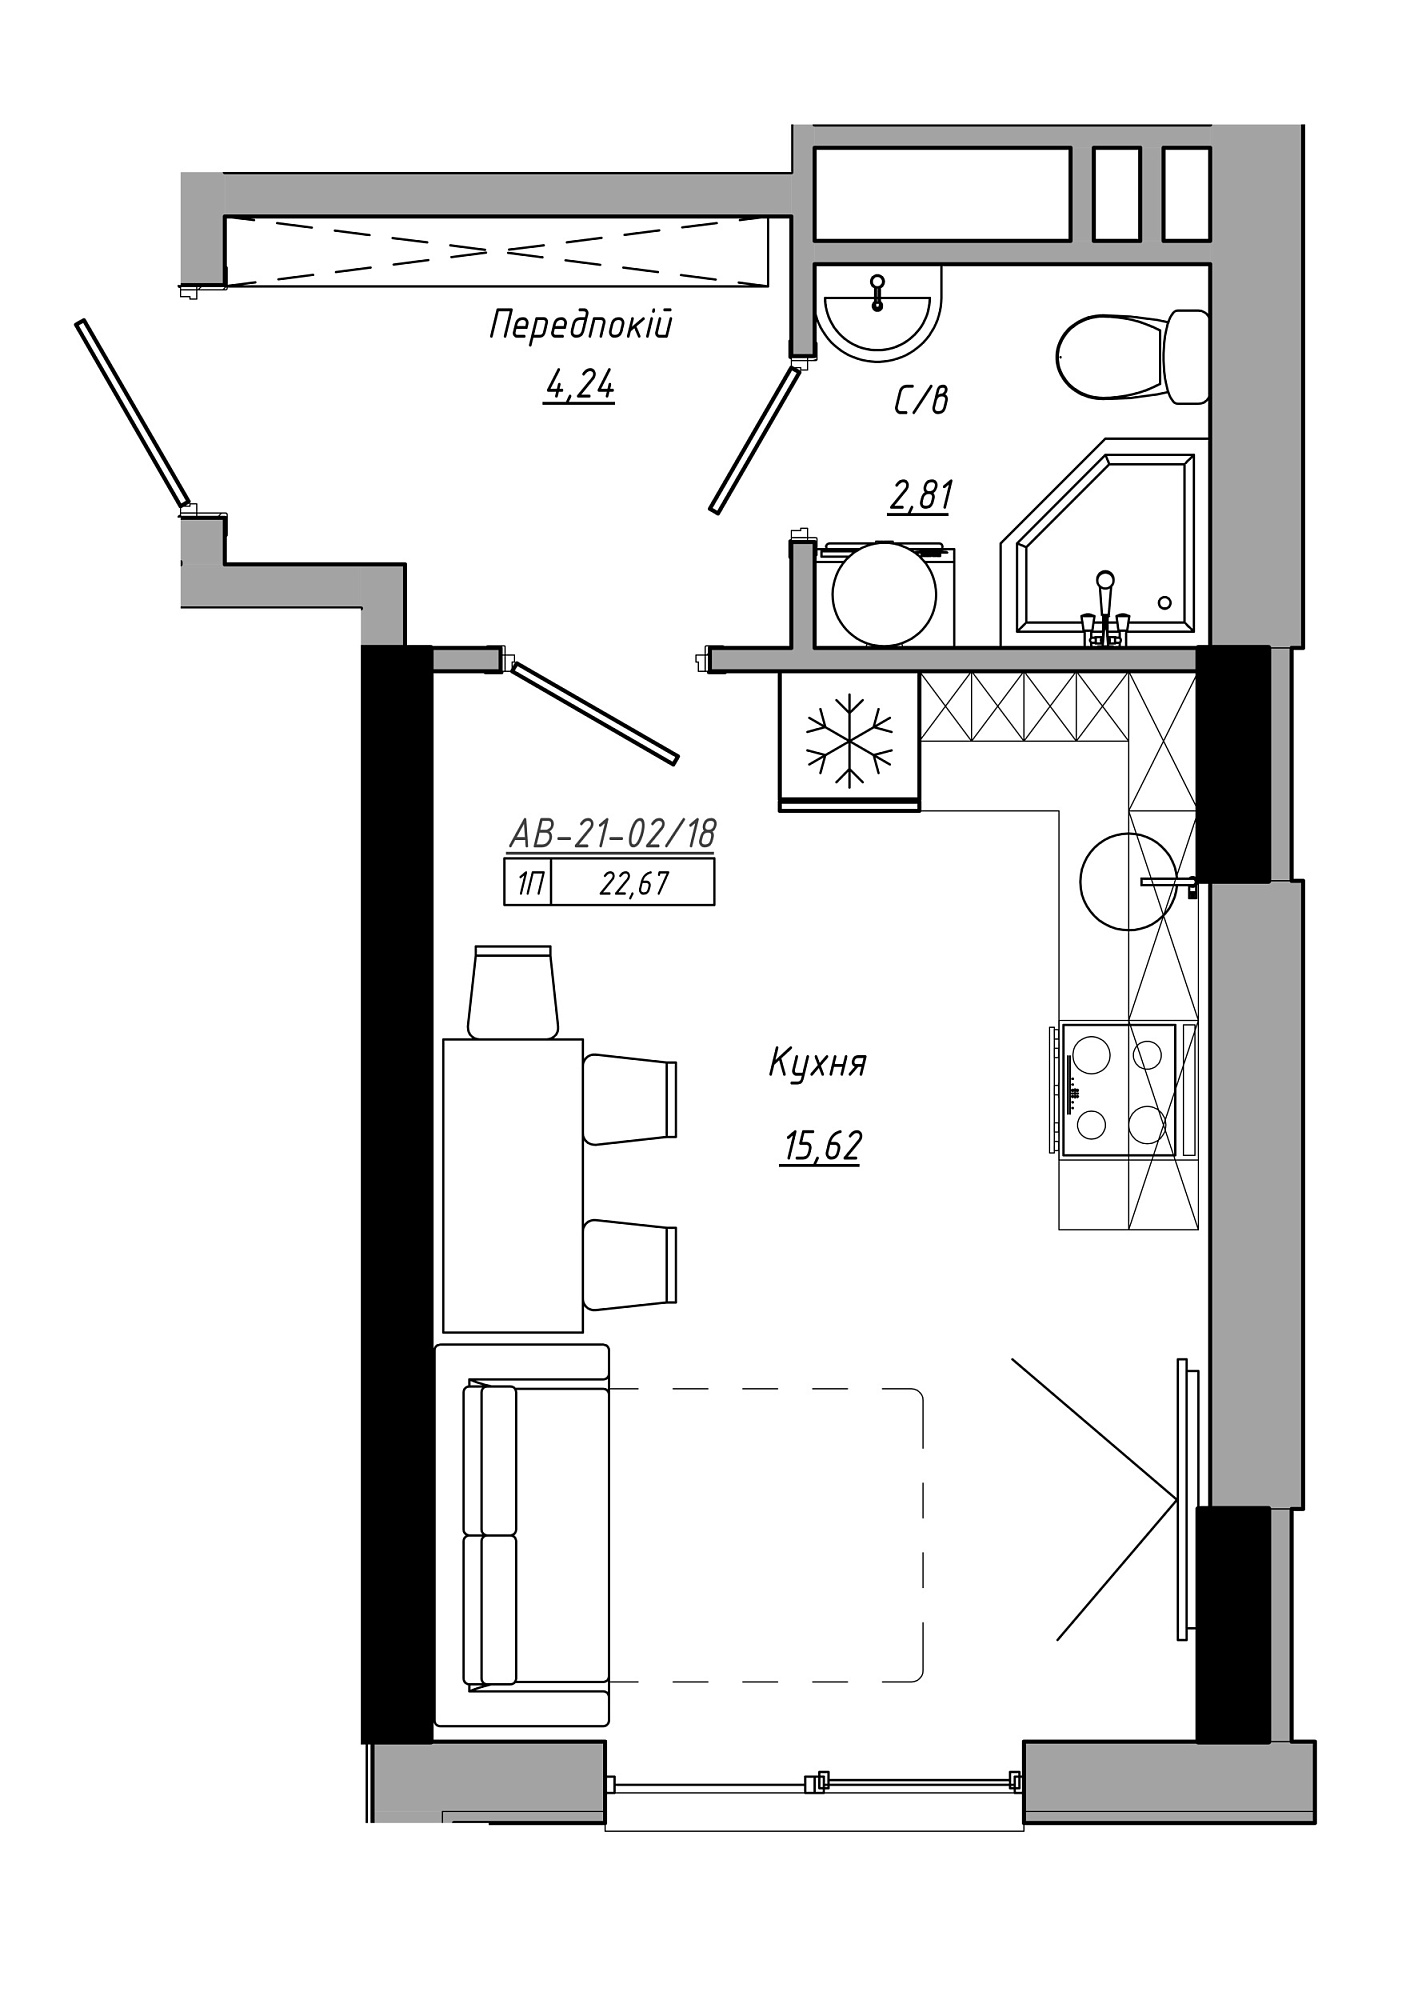 Planning Smart flats area 22.67m2, AB-21-02/00018.